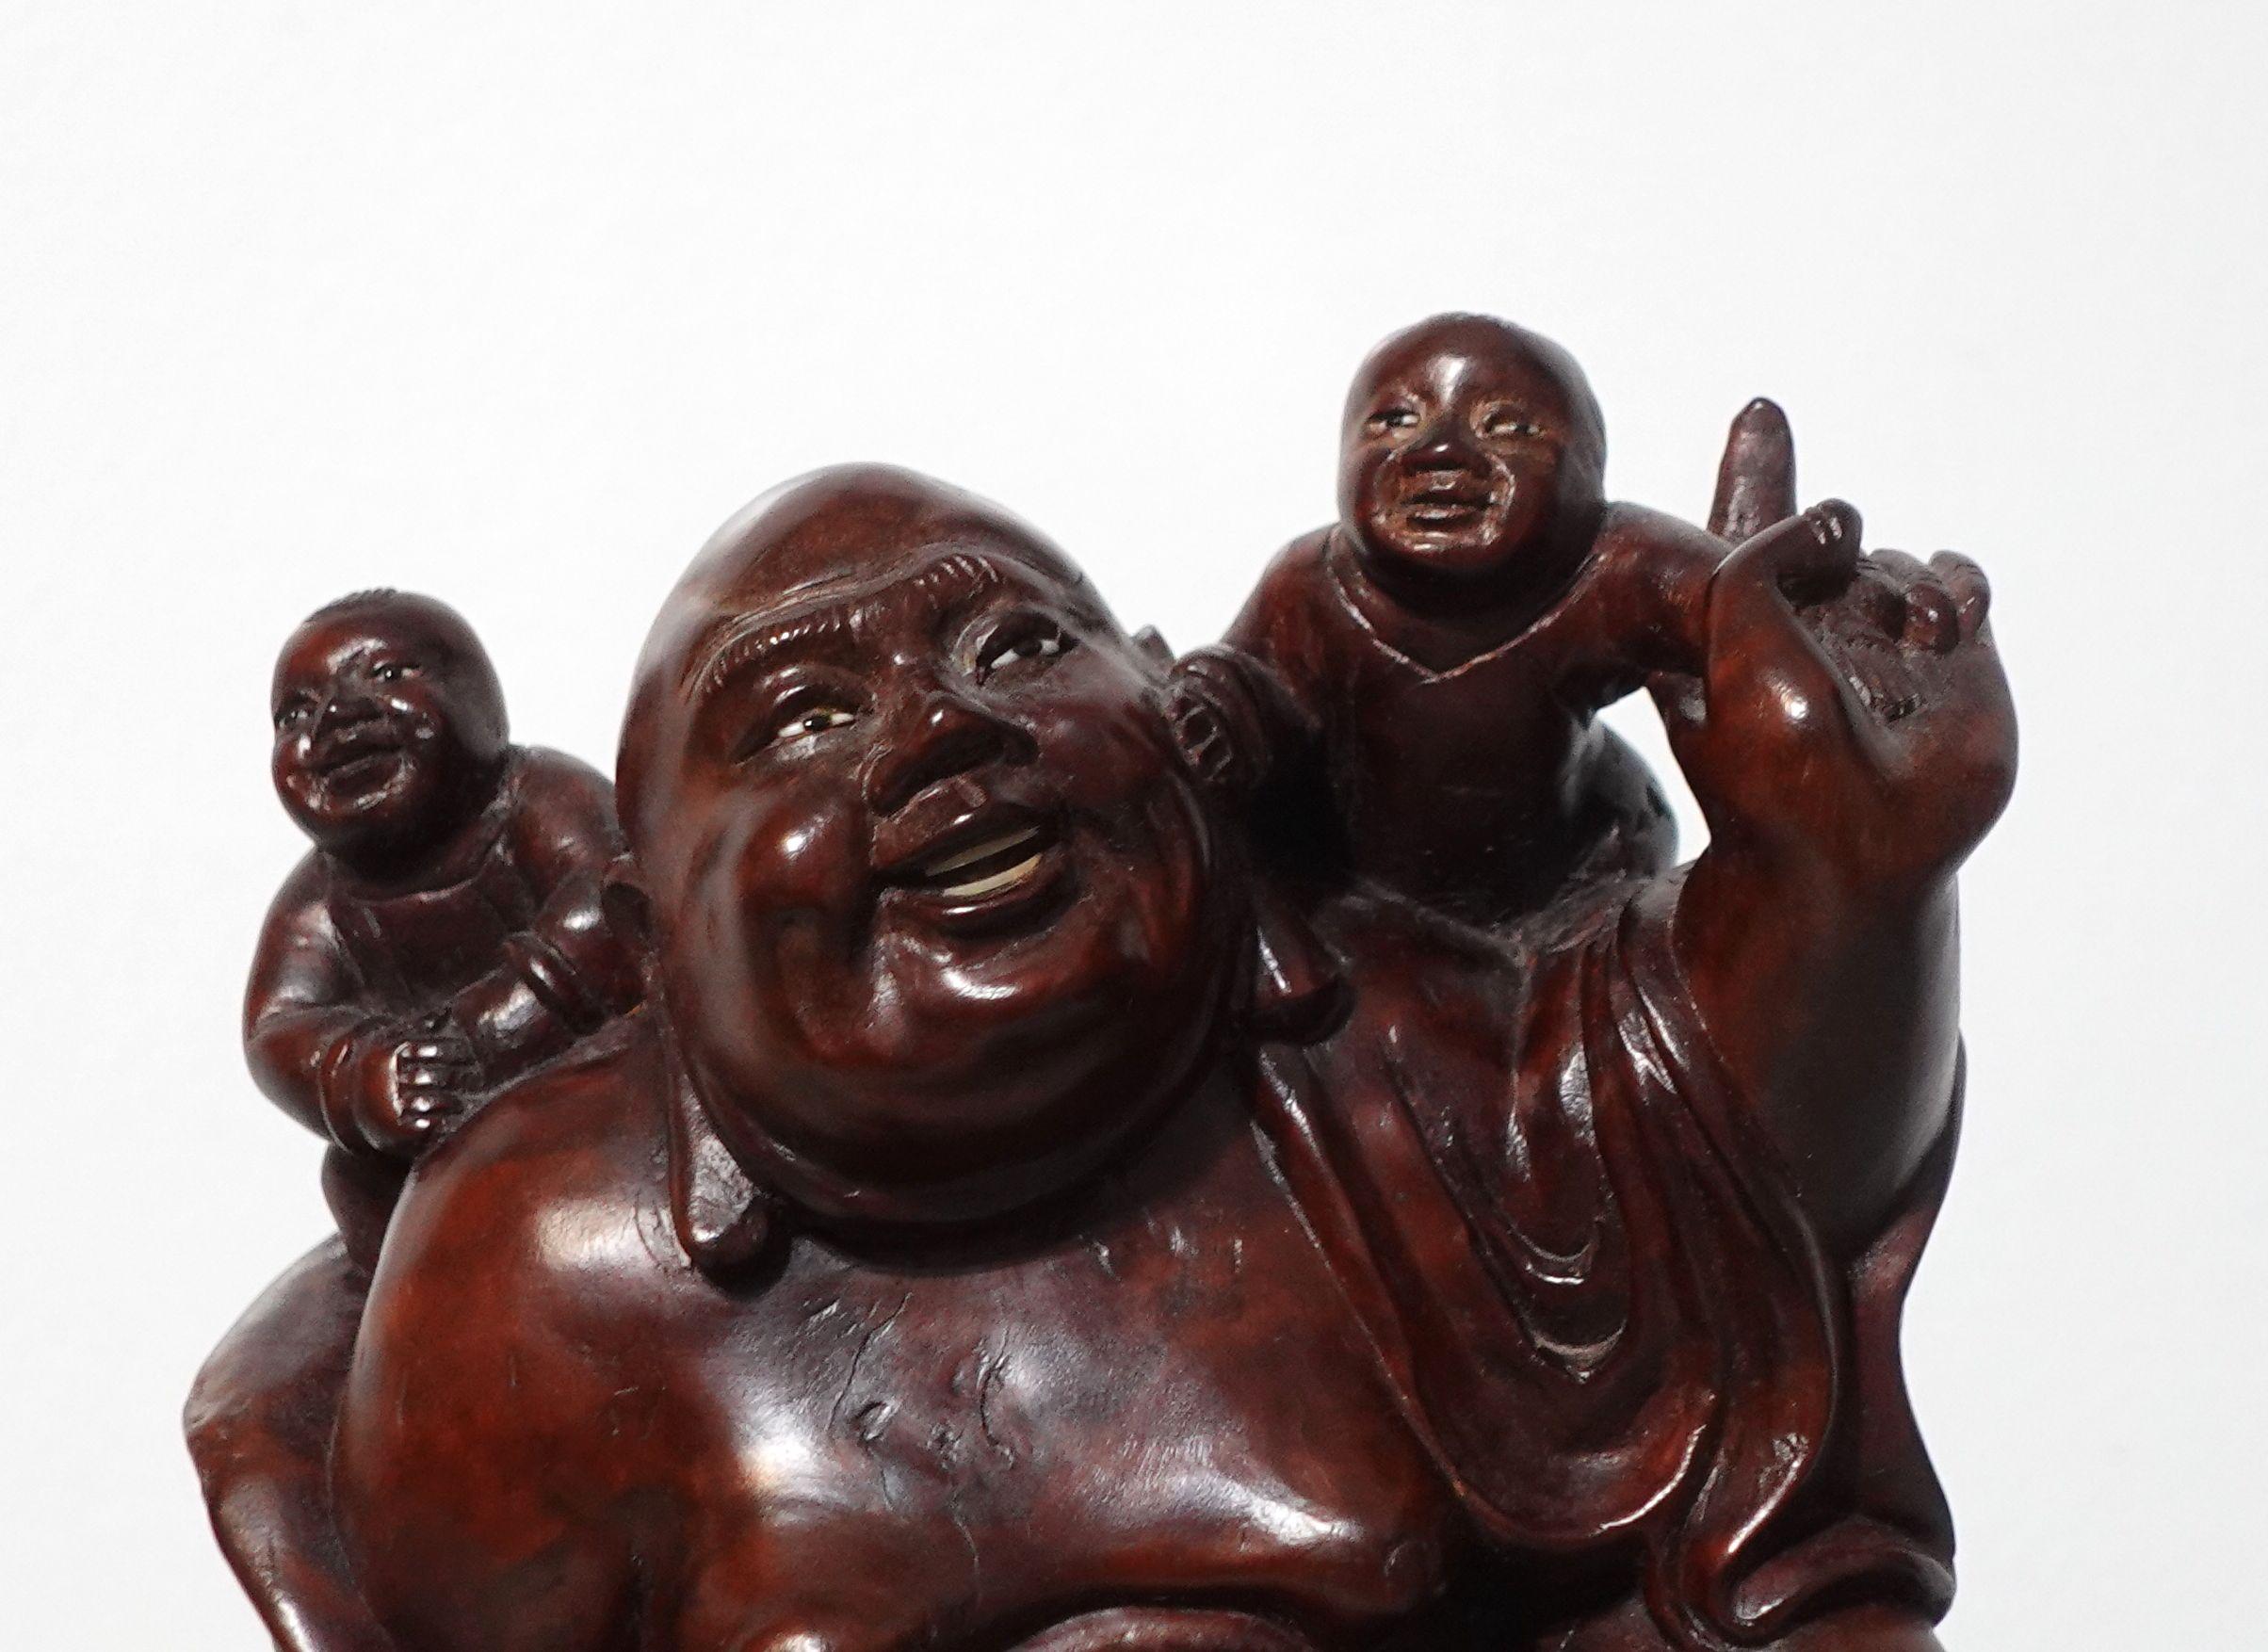 laughing buddha with kids